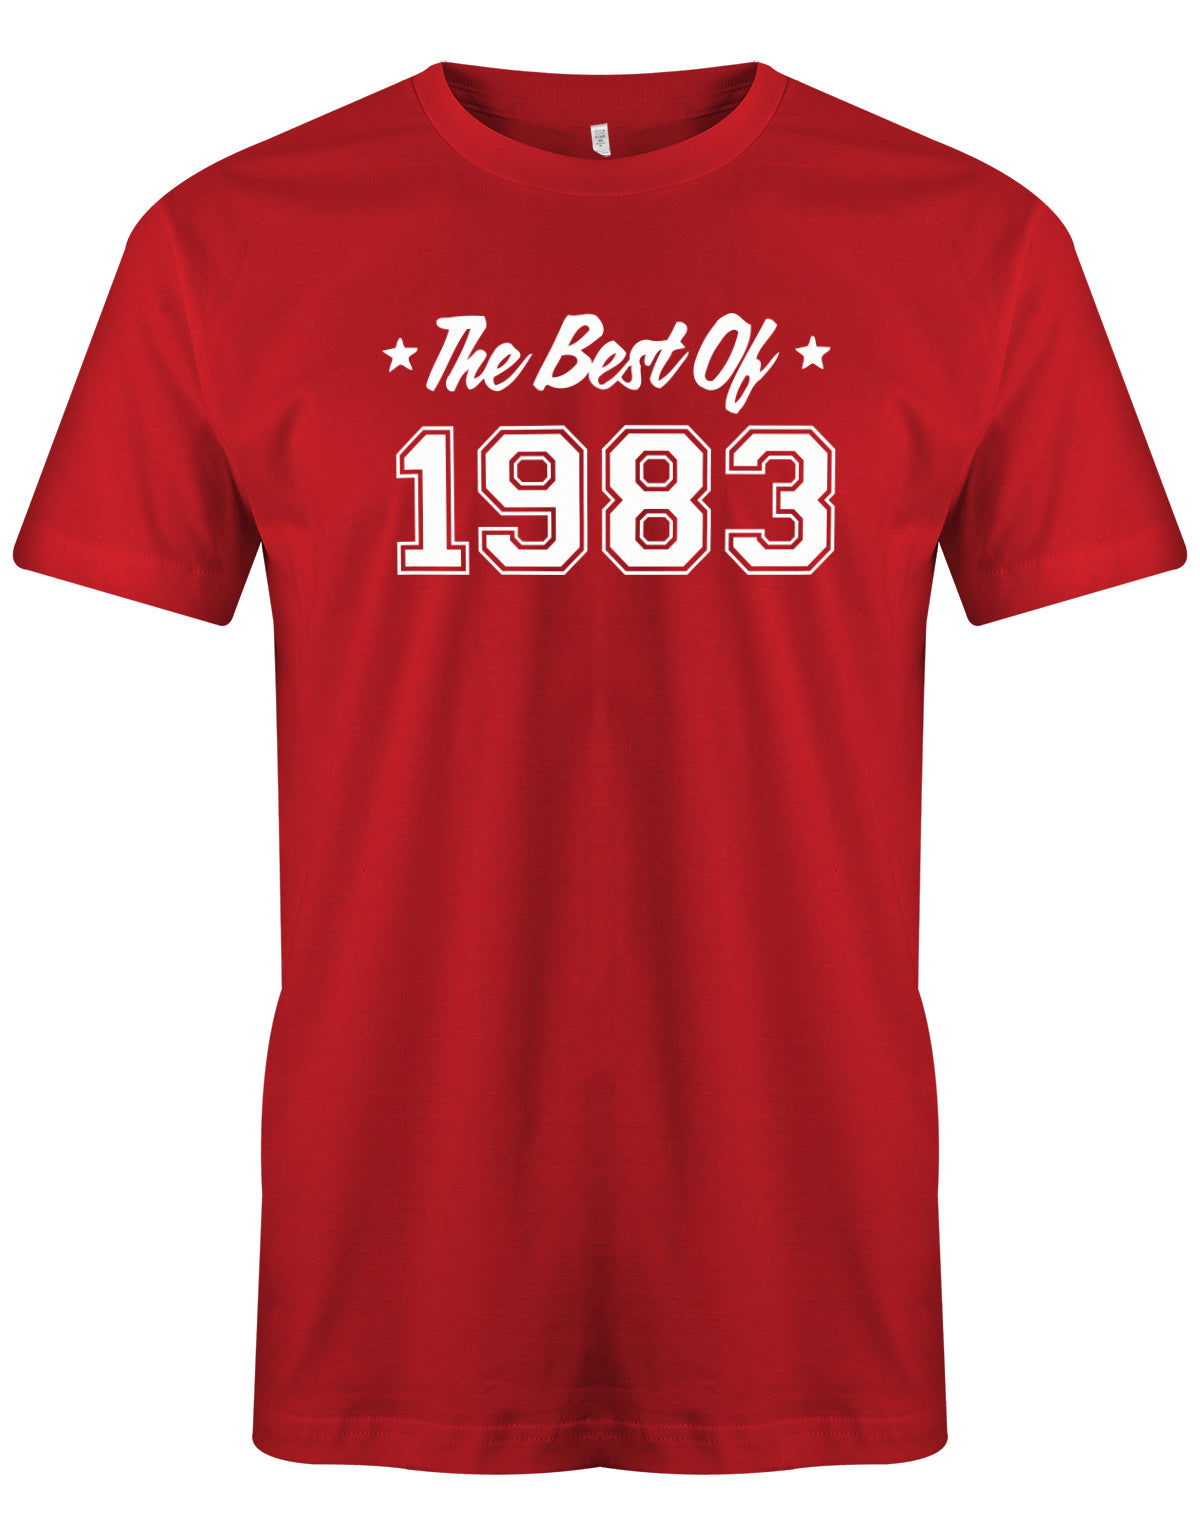 The best of 1983 - T-Shirt 40 Geburtstag Männer - Jahrgang 1983 TShirt  Rot